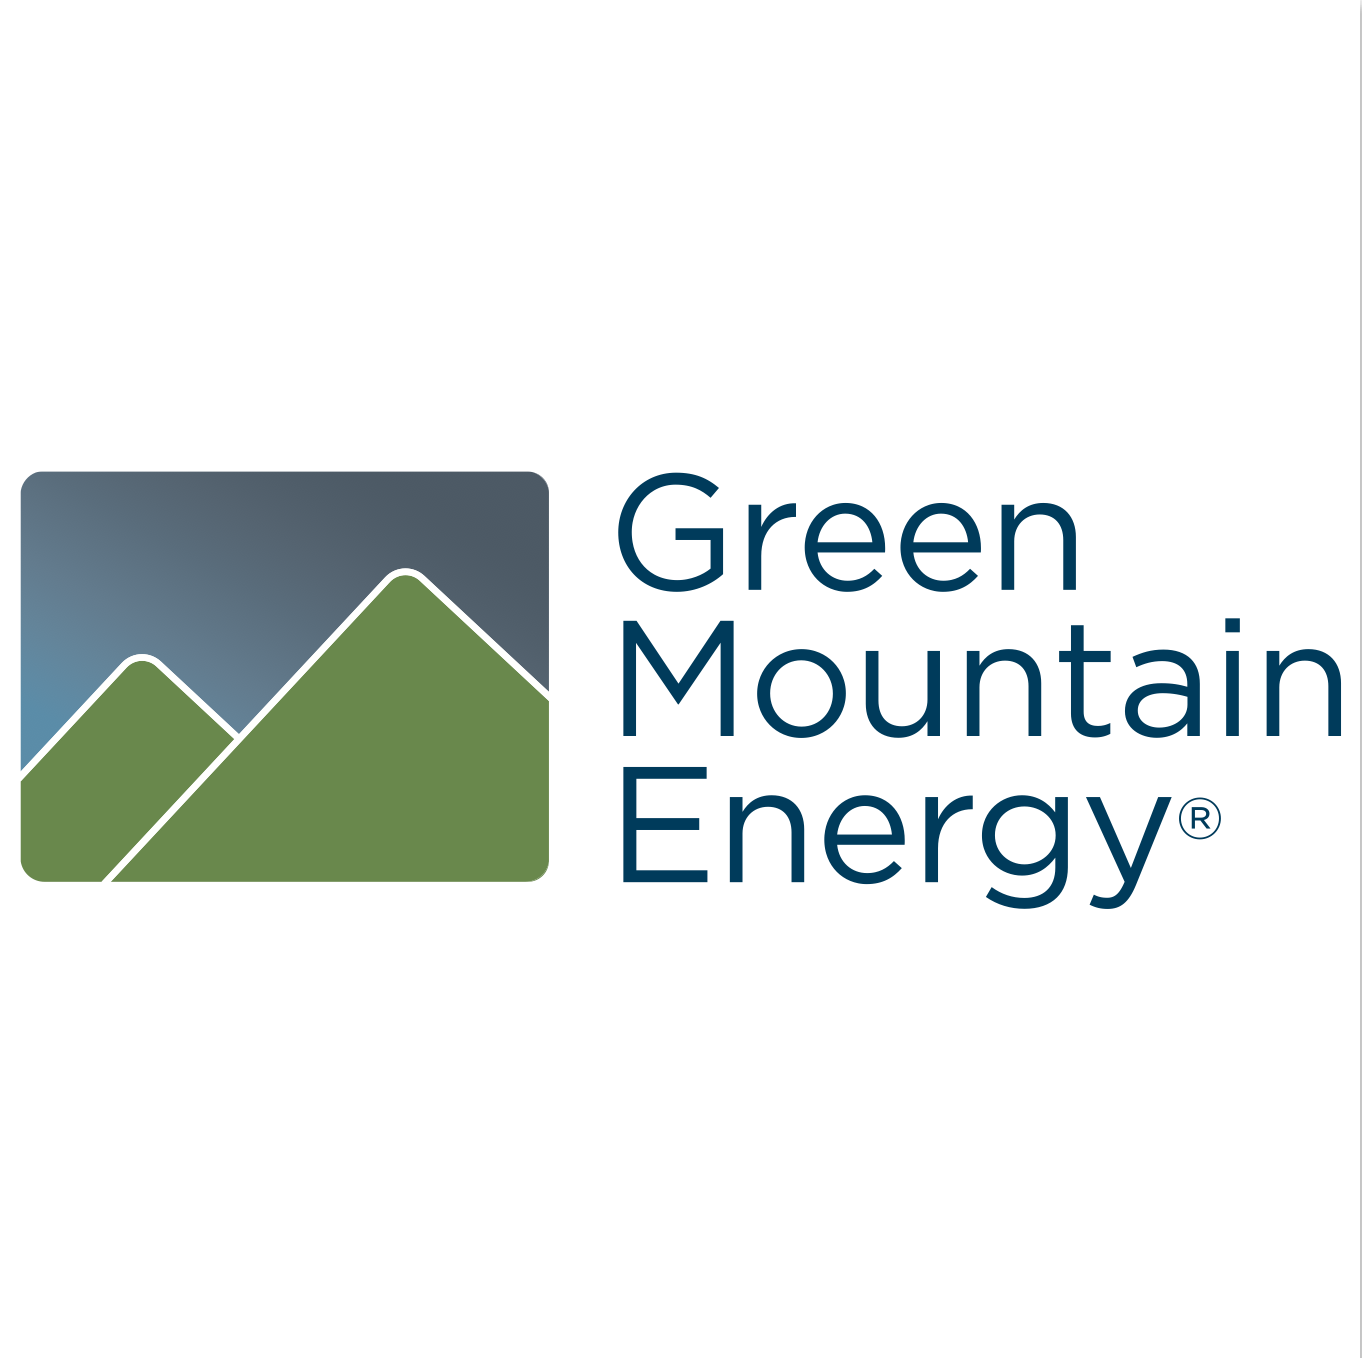 Green Mountain energy 2015 logo.png